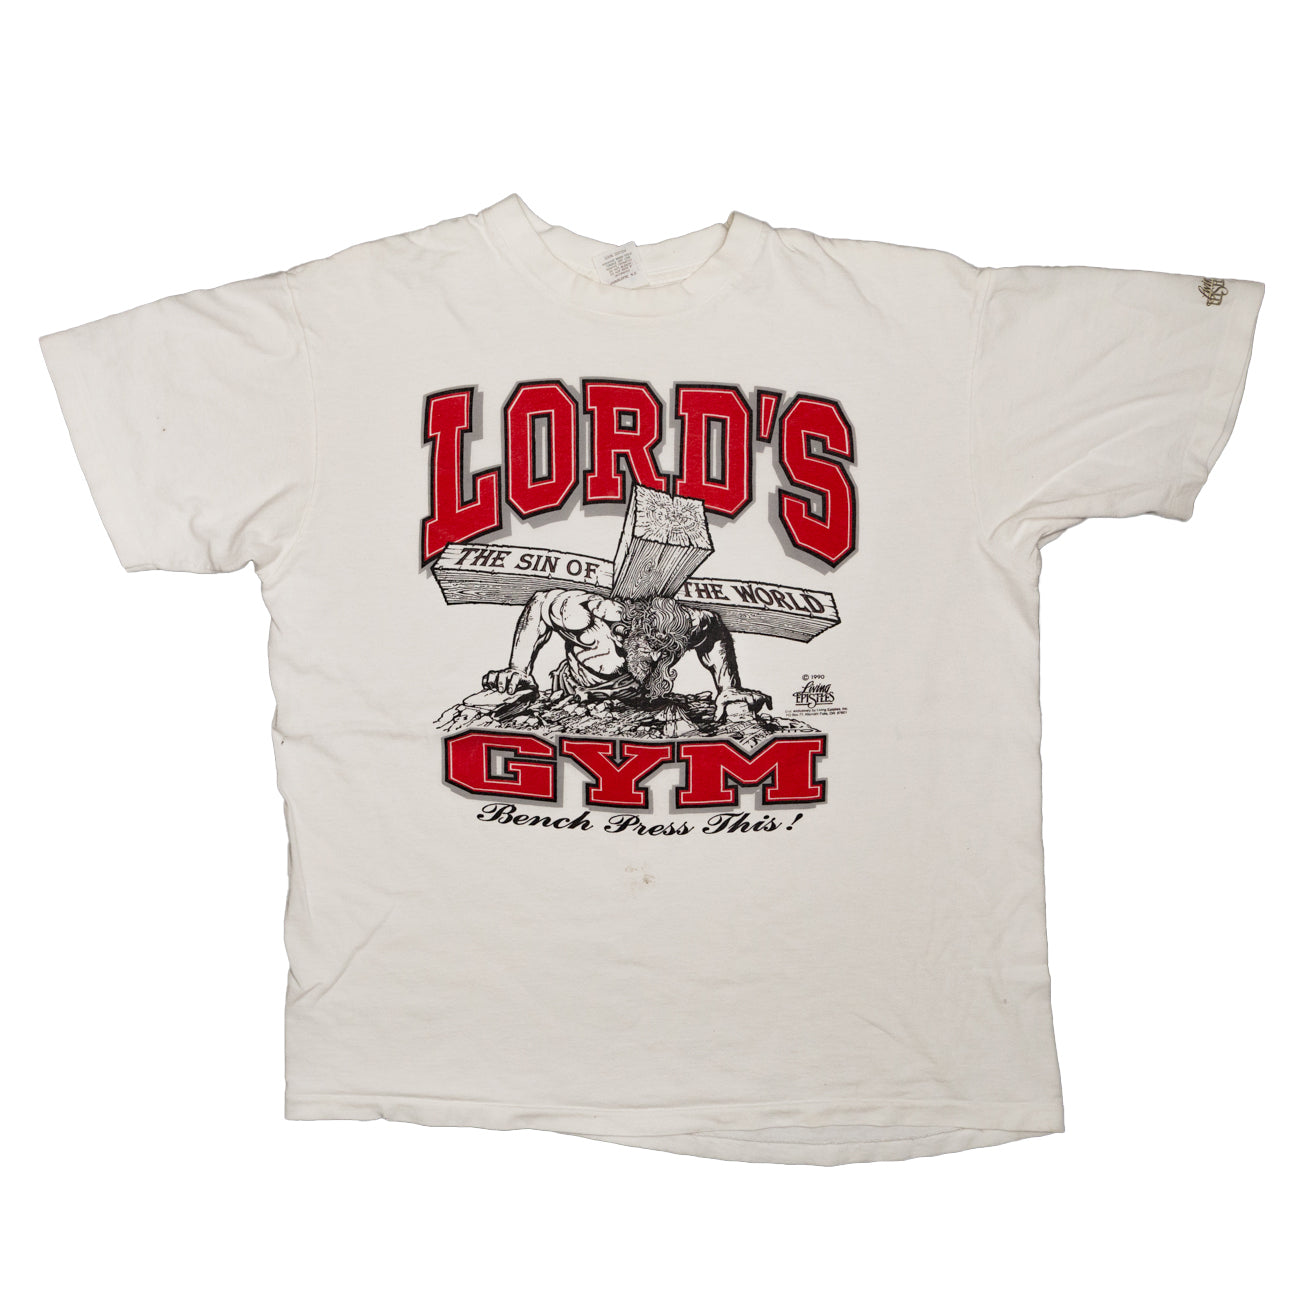 Lords Gym - XL - white